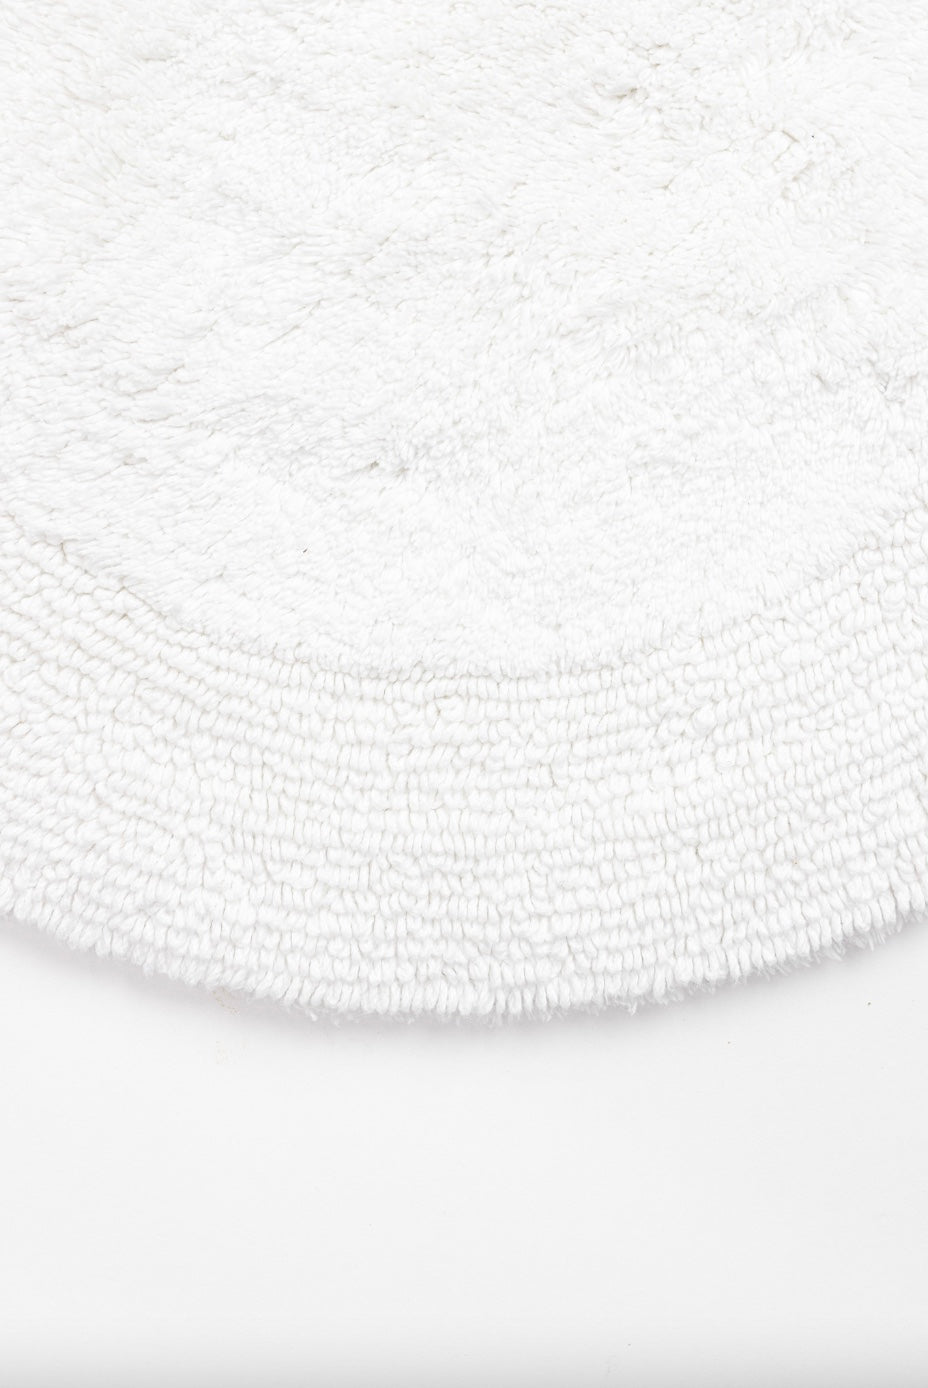 Grund America Puro Cotton Bath Rugs (24 x 40 inches) - Bed Bath